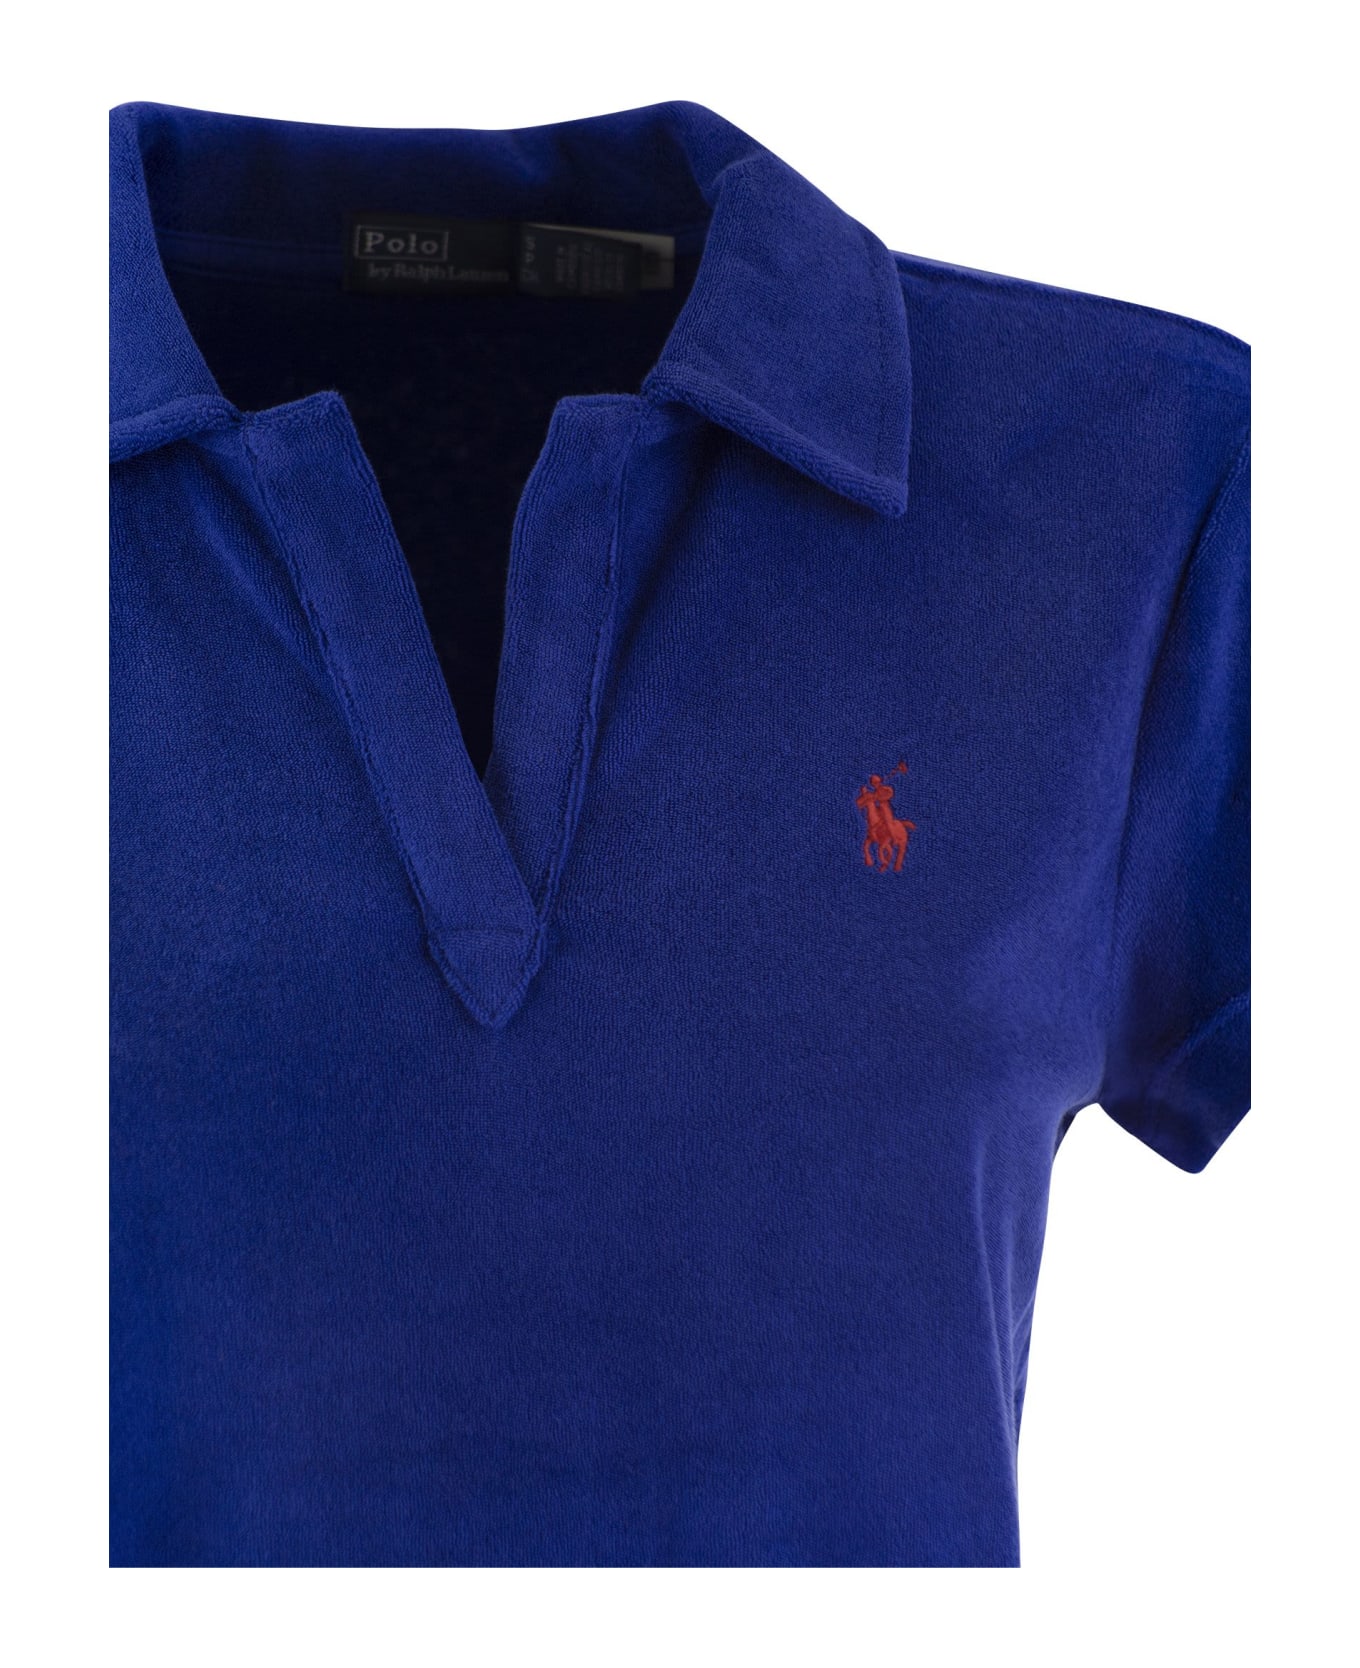 Polo Ralph Lauren Tight Terry Polo Shirt - Royal Blue Tシャツ